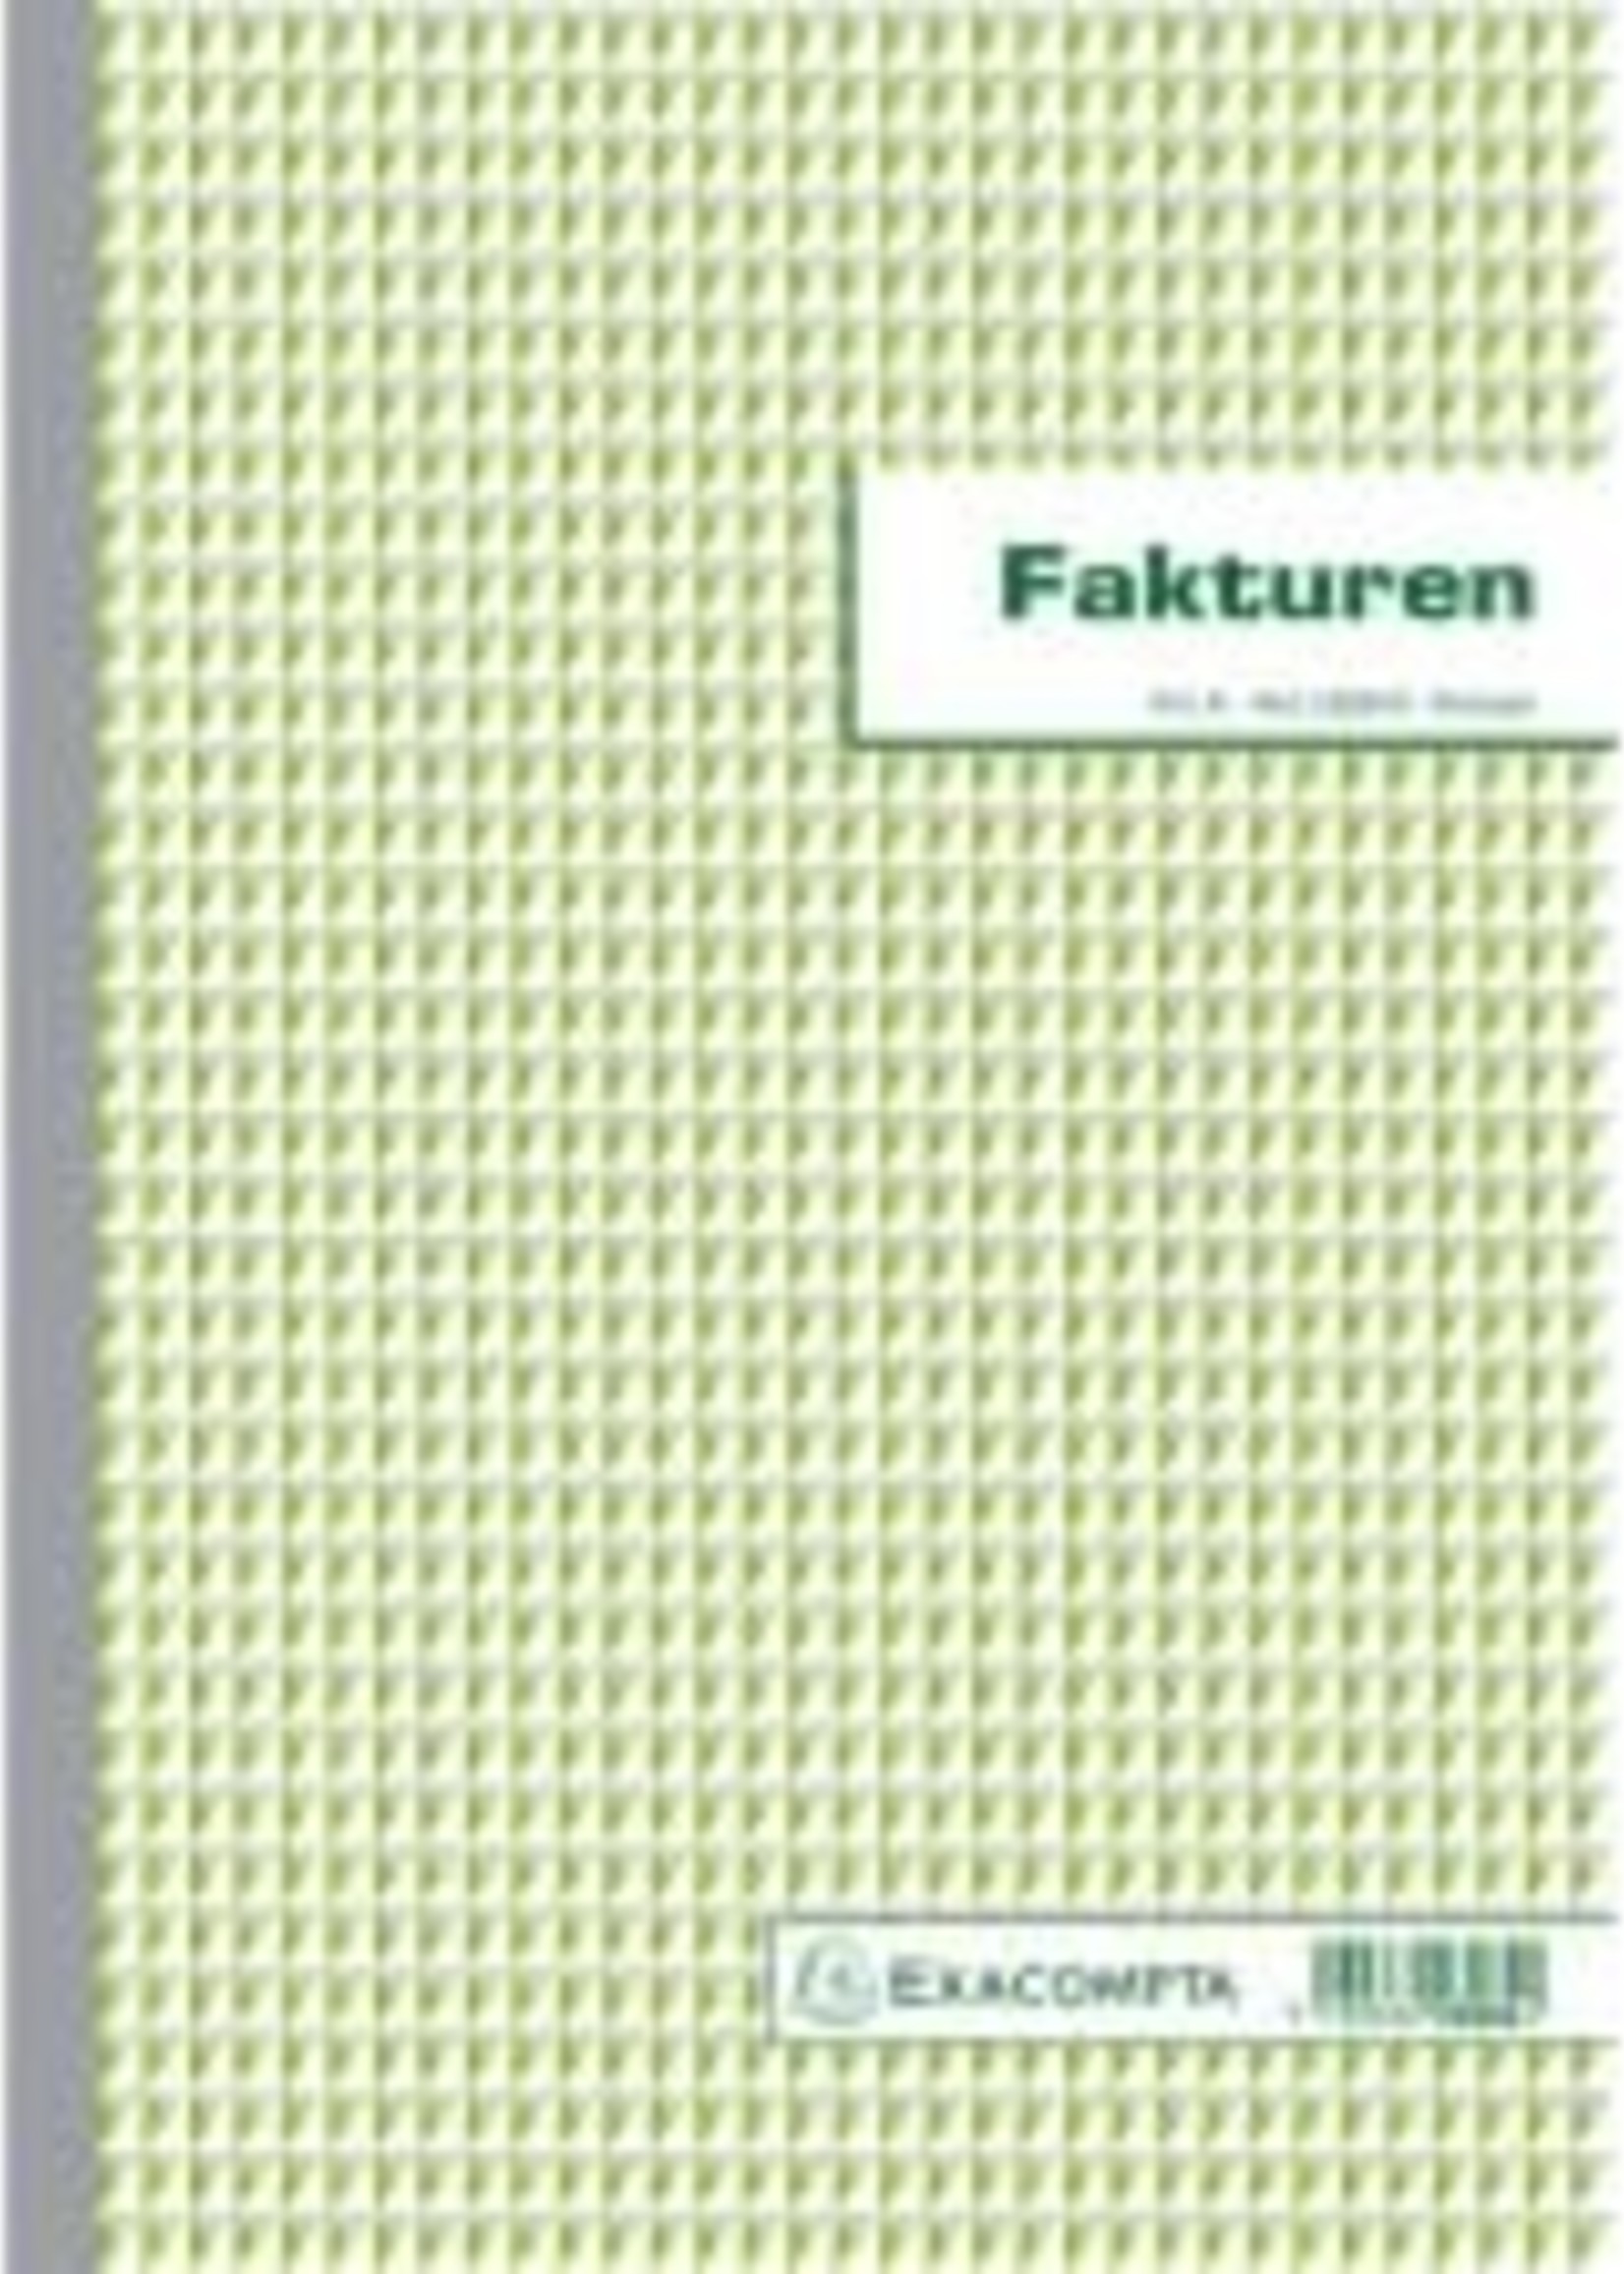 Exacompta Factuurboek A4 50 blad 1 copy NCR, Nederlands